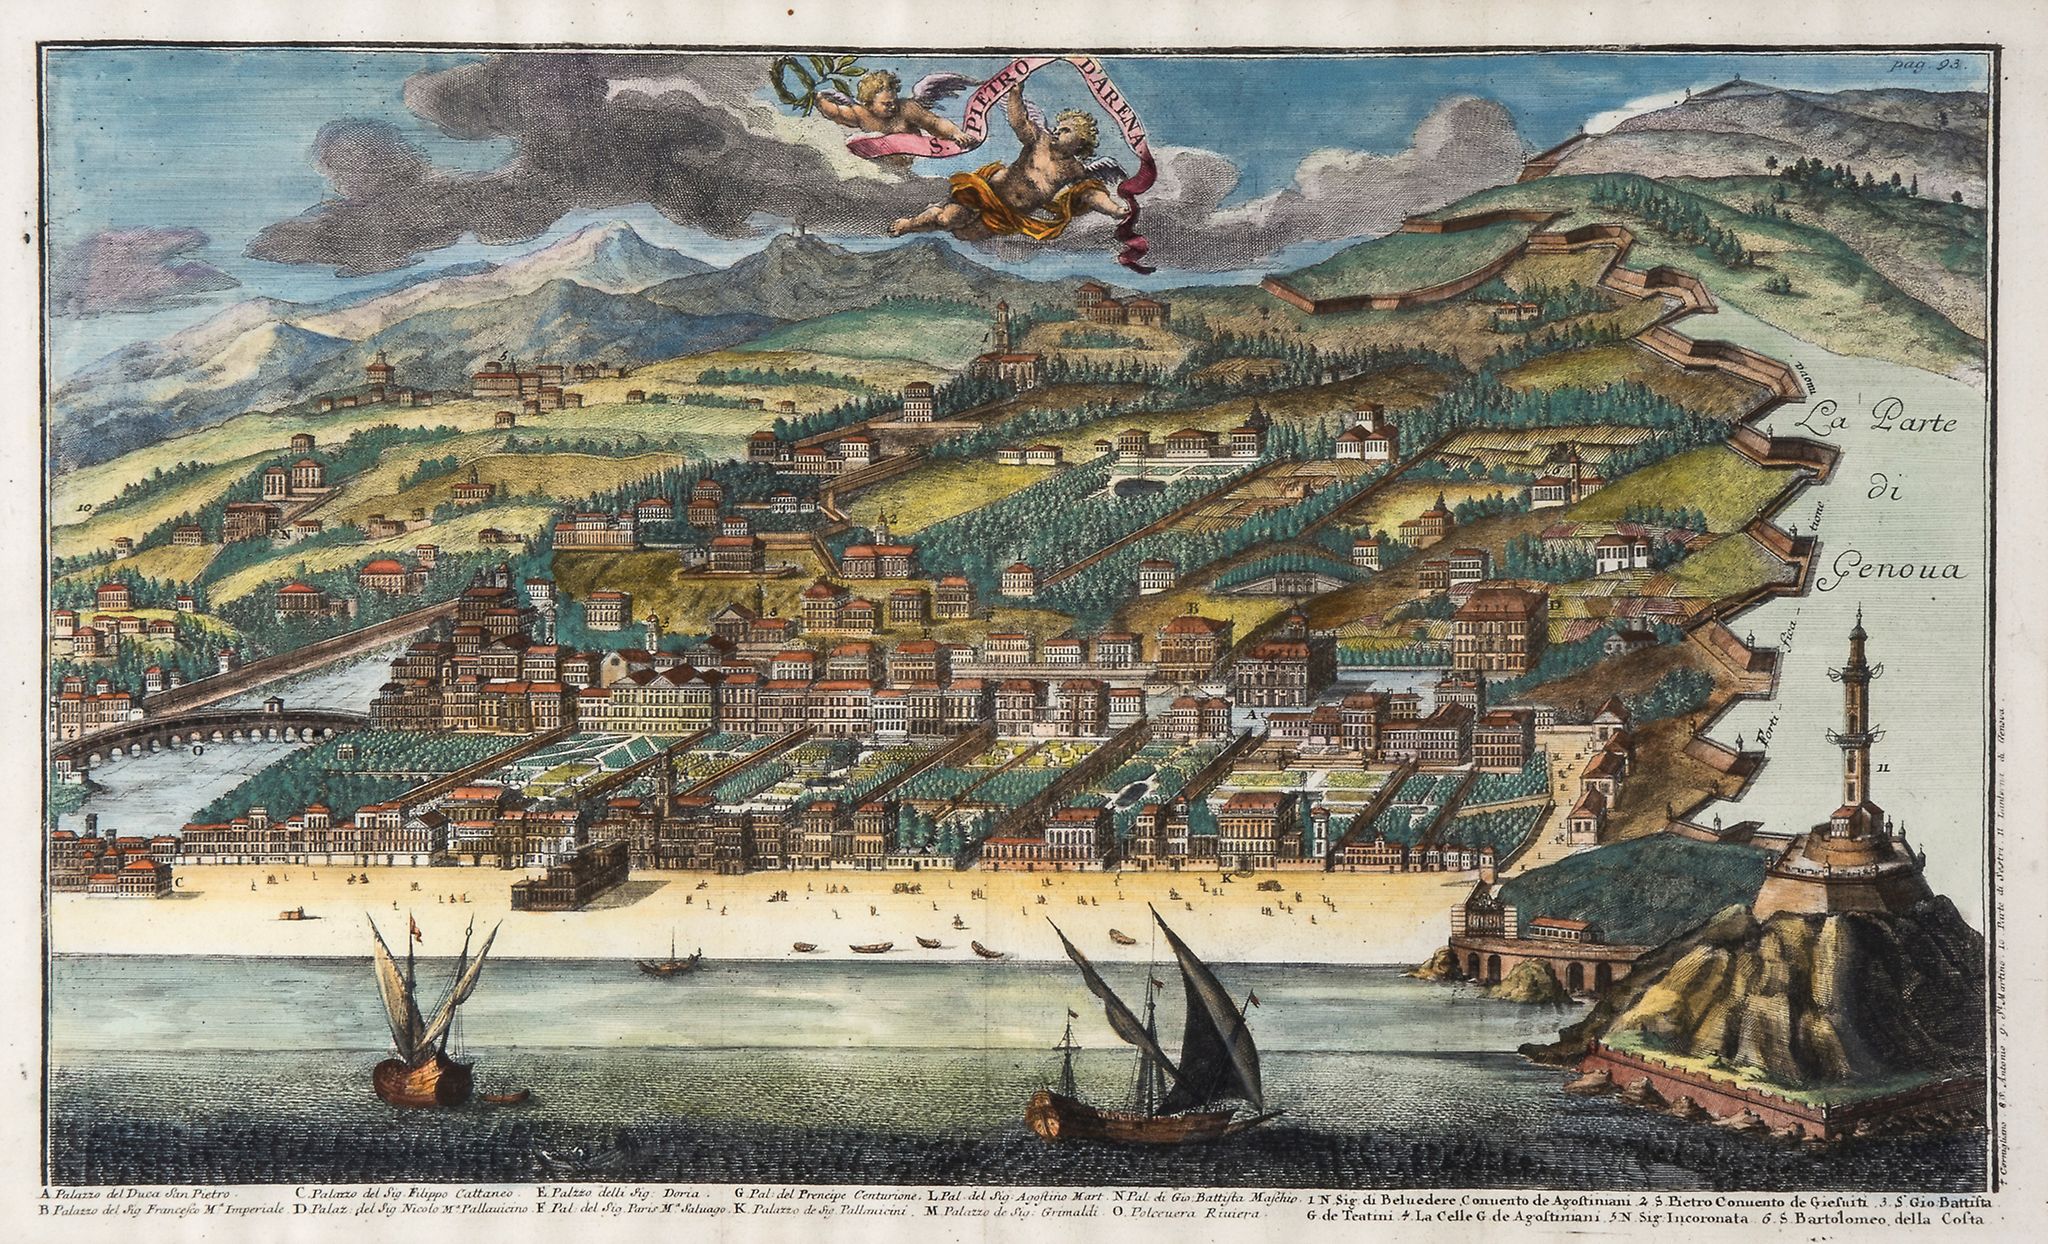 -. Volckamer (Johann Christoph) - S. Pietro d'Arena,  bird's-eye view of Genoa including the